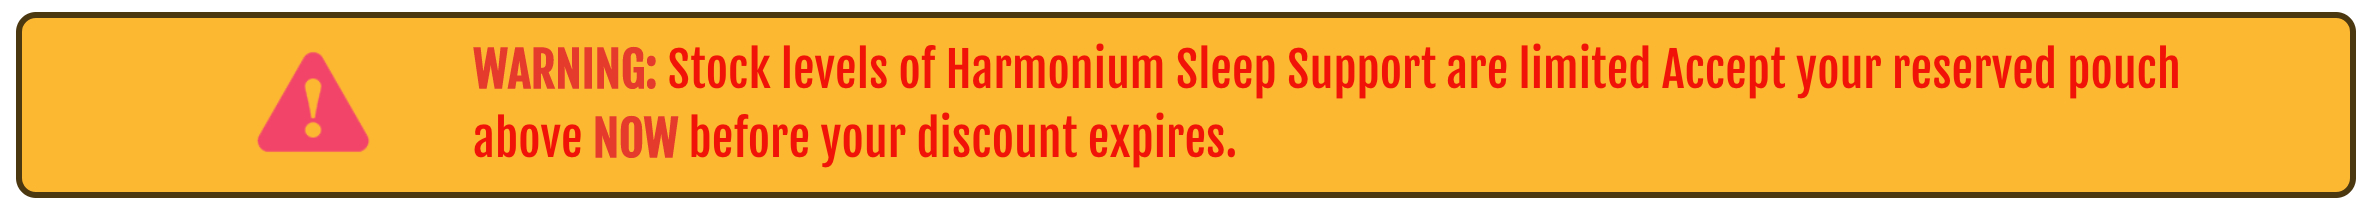 Harmonium Sleep Support - WARNING